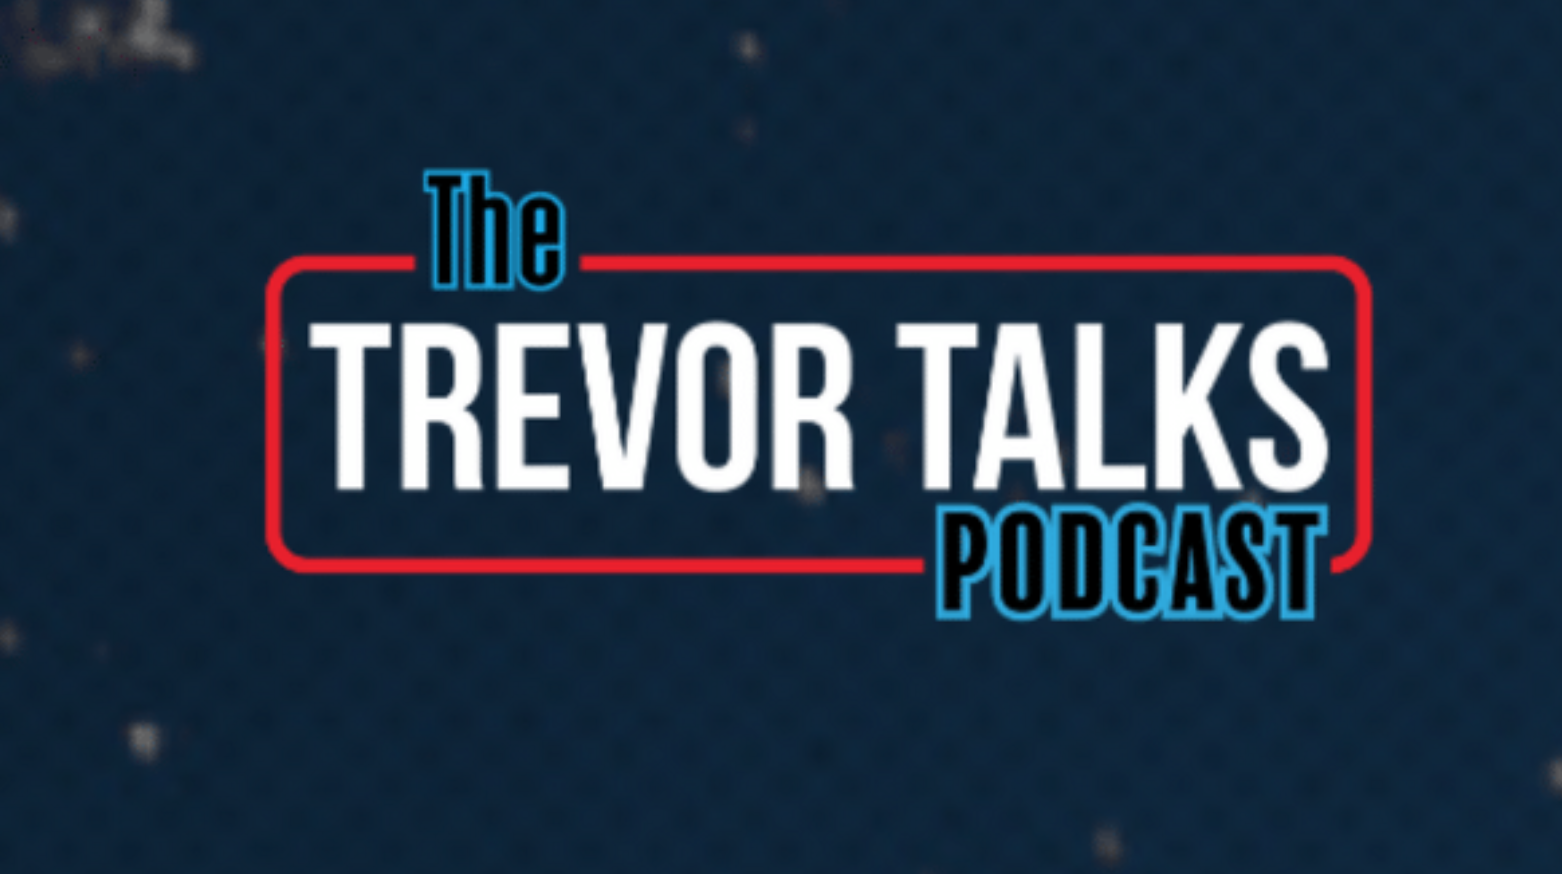 The Trevor Talks Podcast